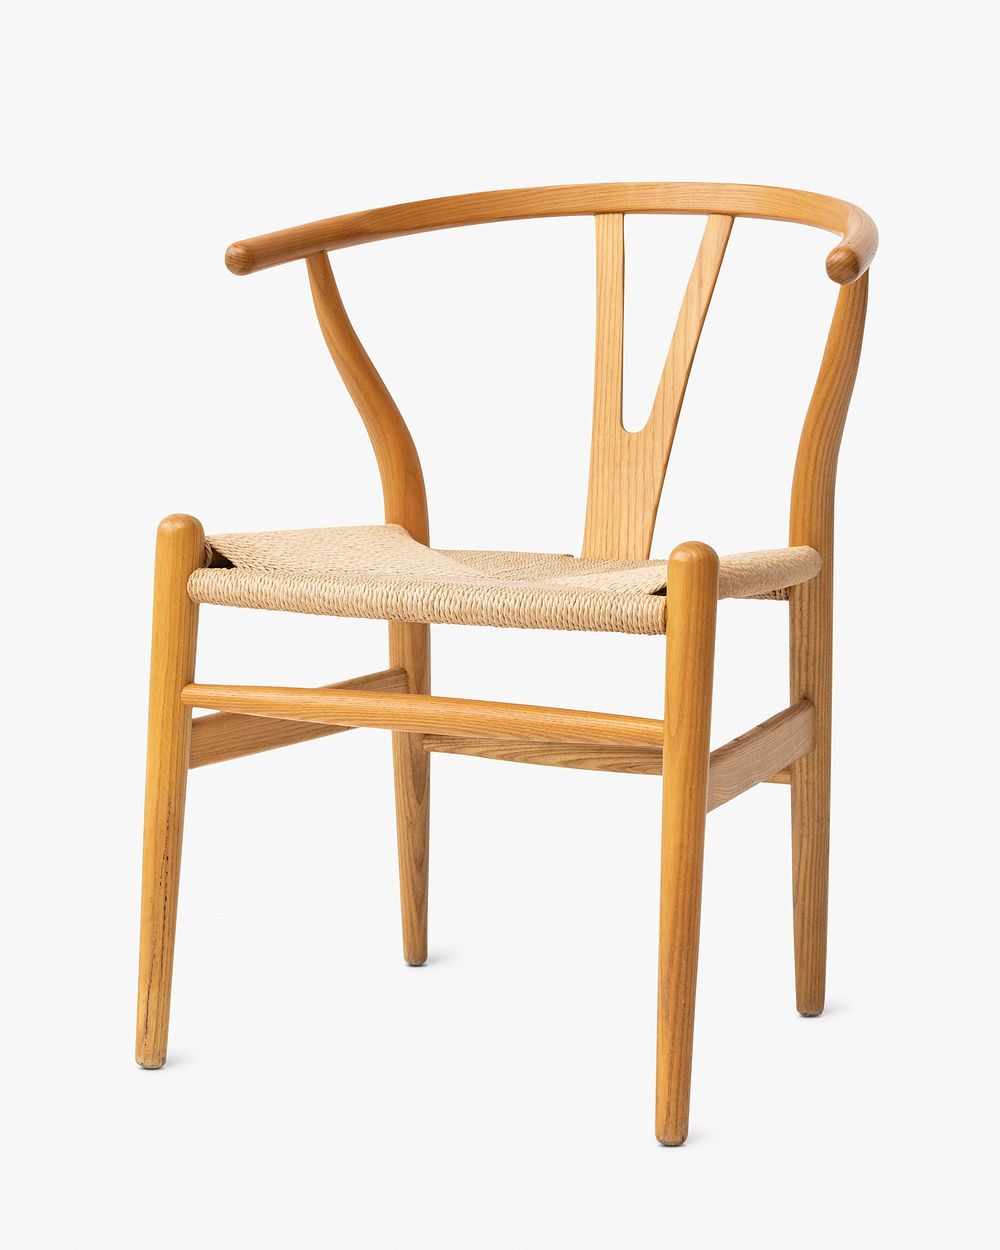 Wishbone chair in natural wood